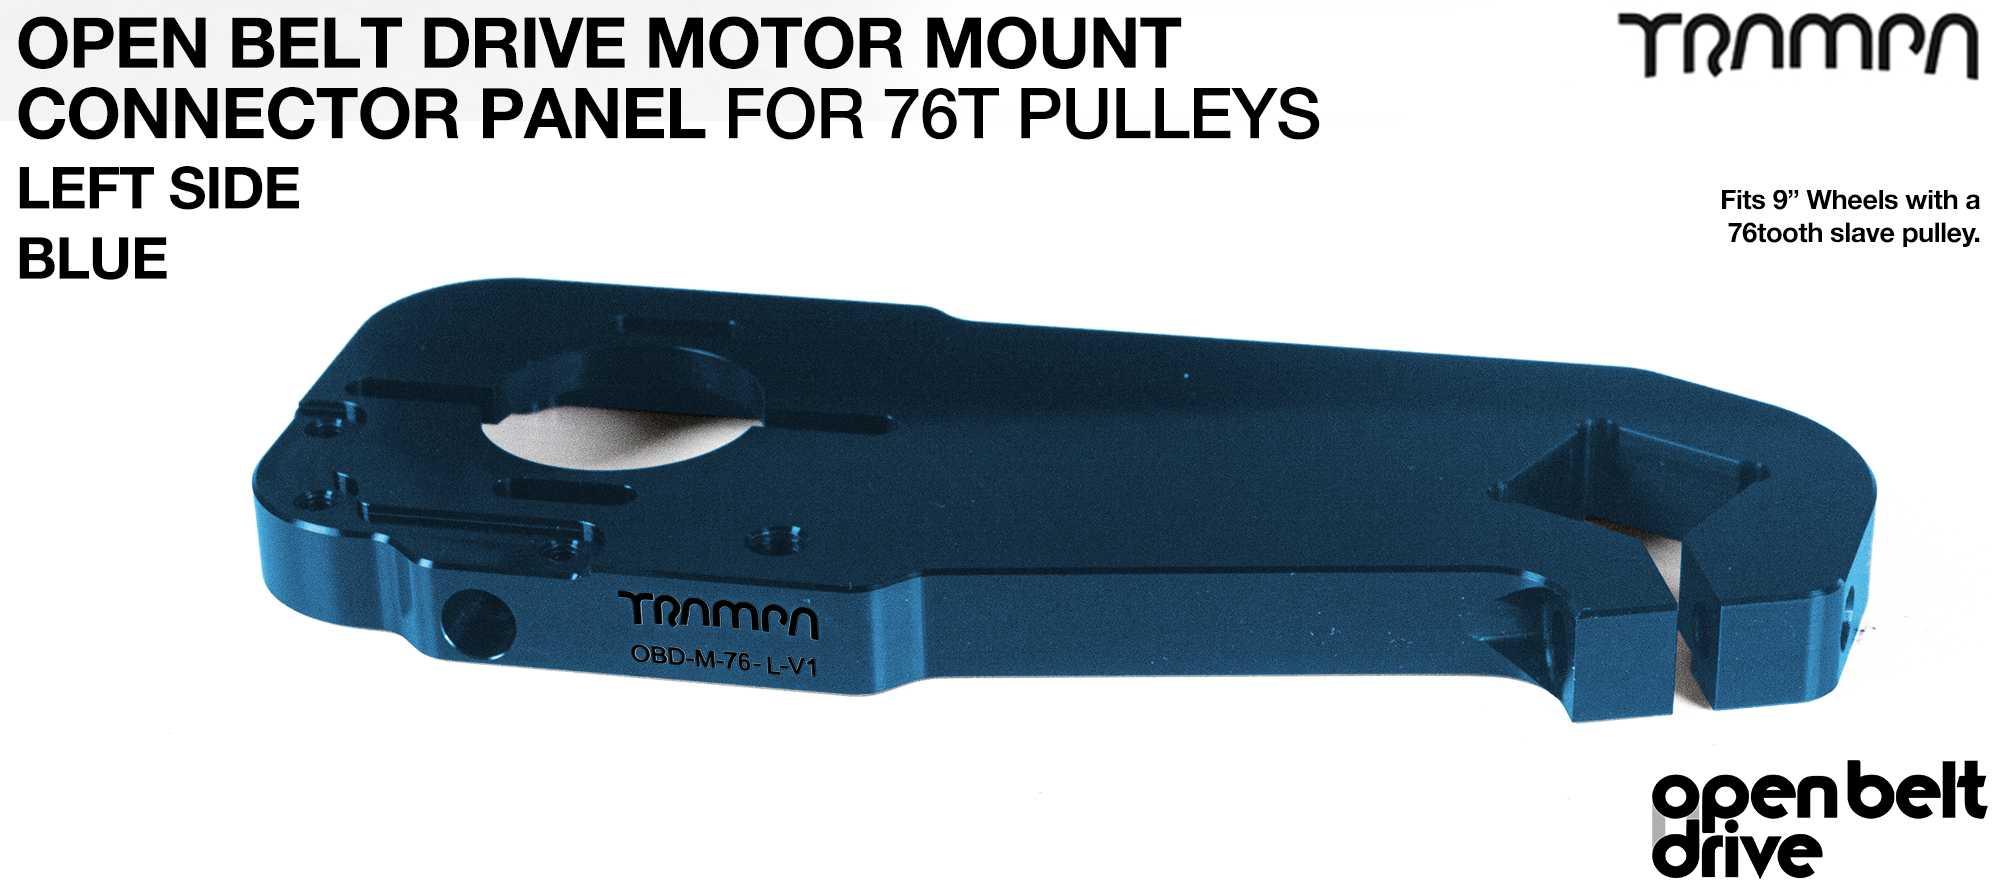 OBD Motor Mount Connector Panel for 76 tooth pulleys - REGULAR - BLUE